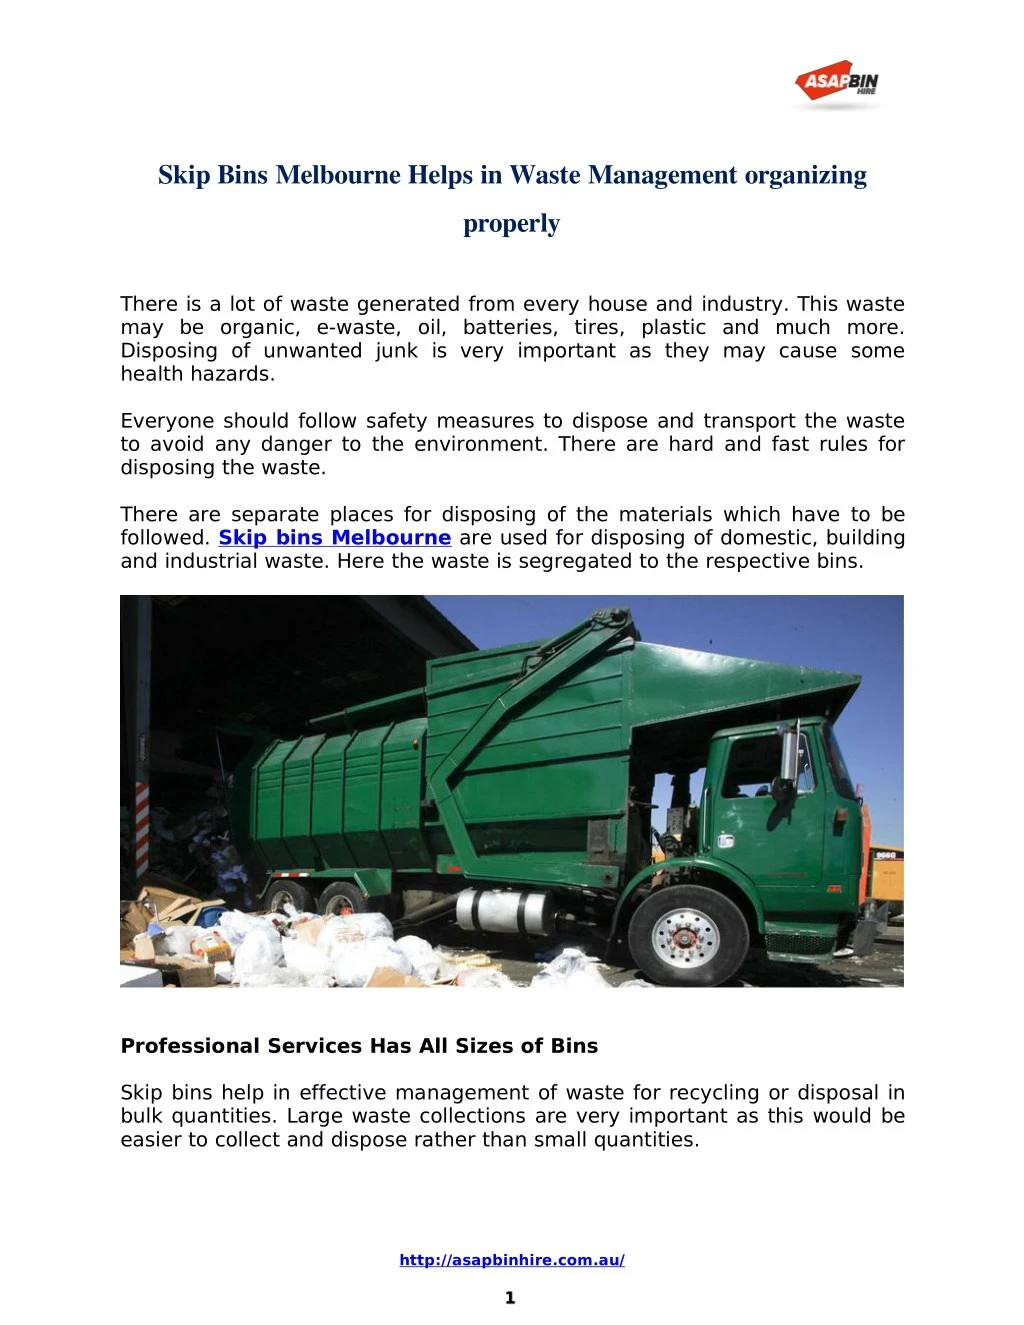 skip bins melbourne helps in waste management